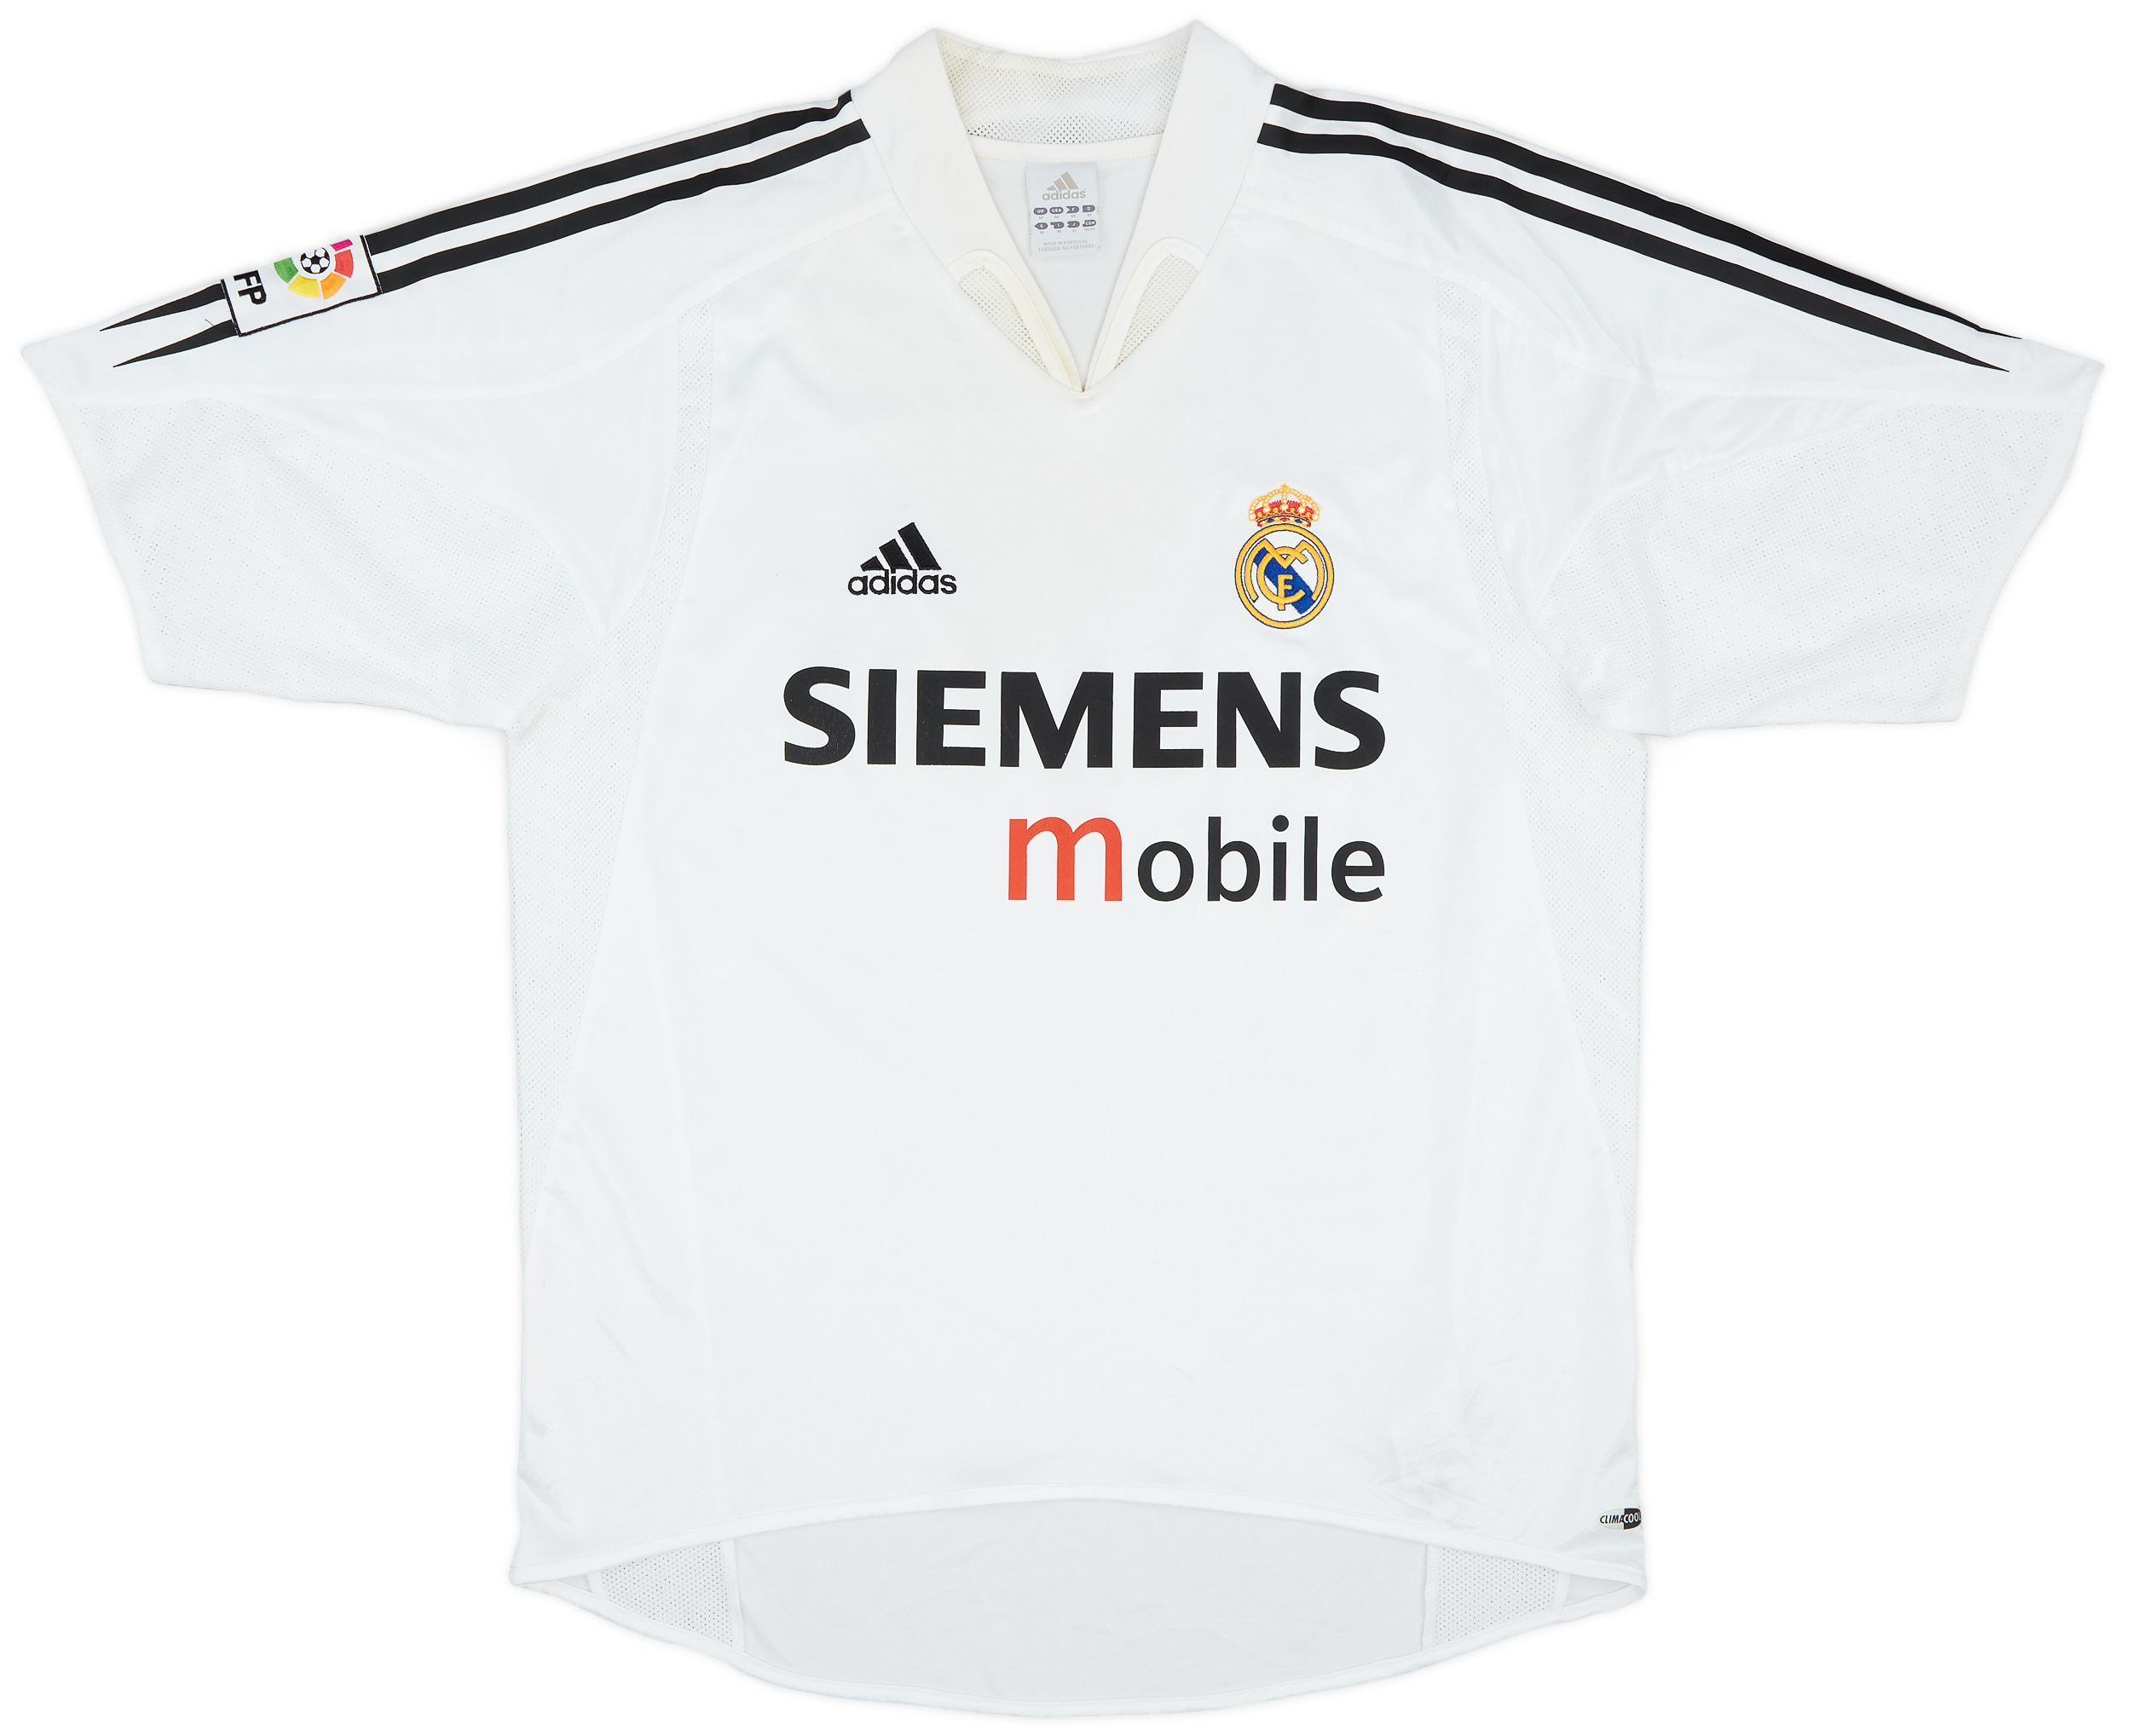 2004-05 Real Madrid Home Shirt - Very Good 6/10 - ()